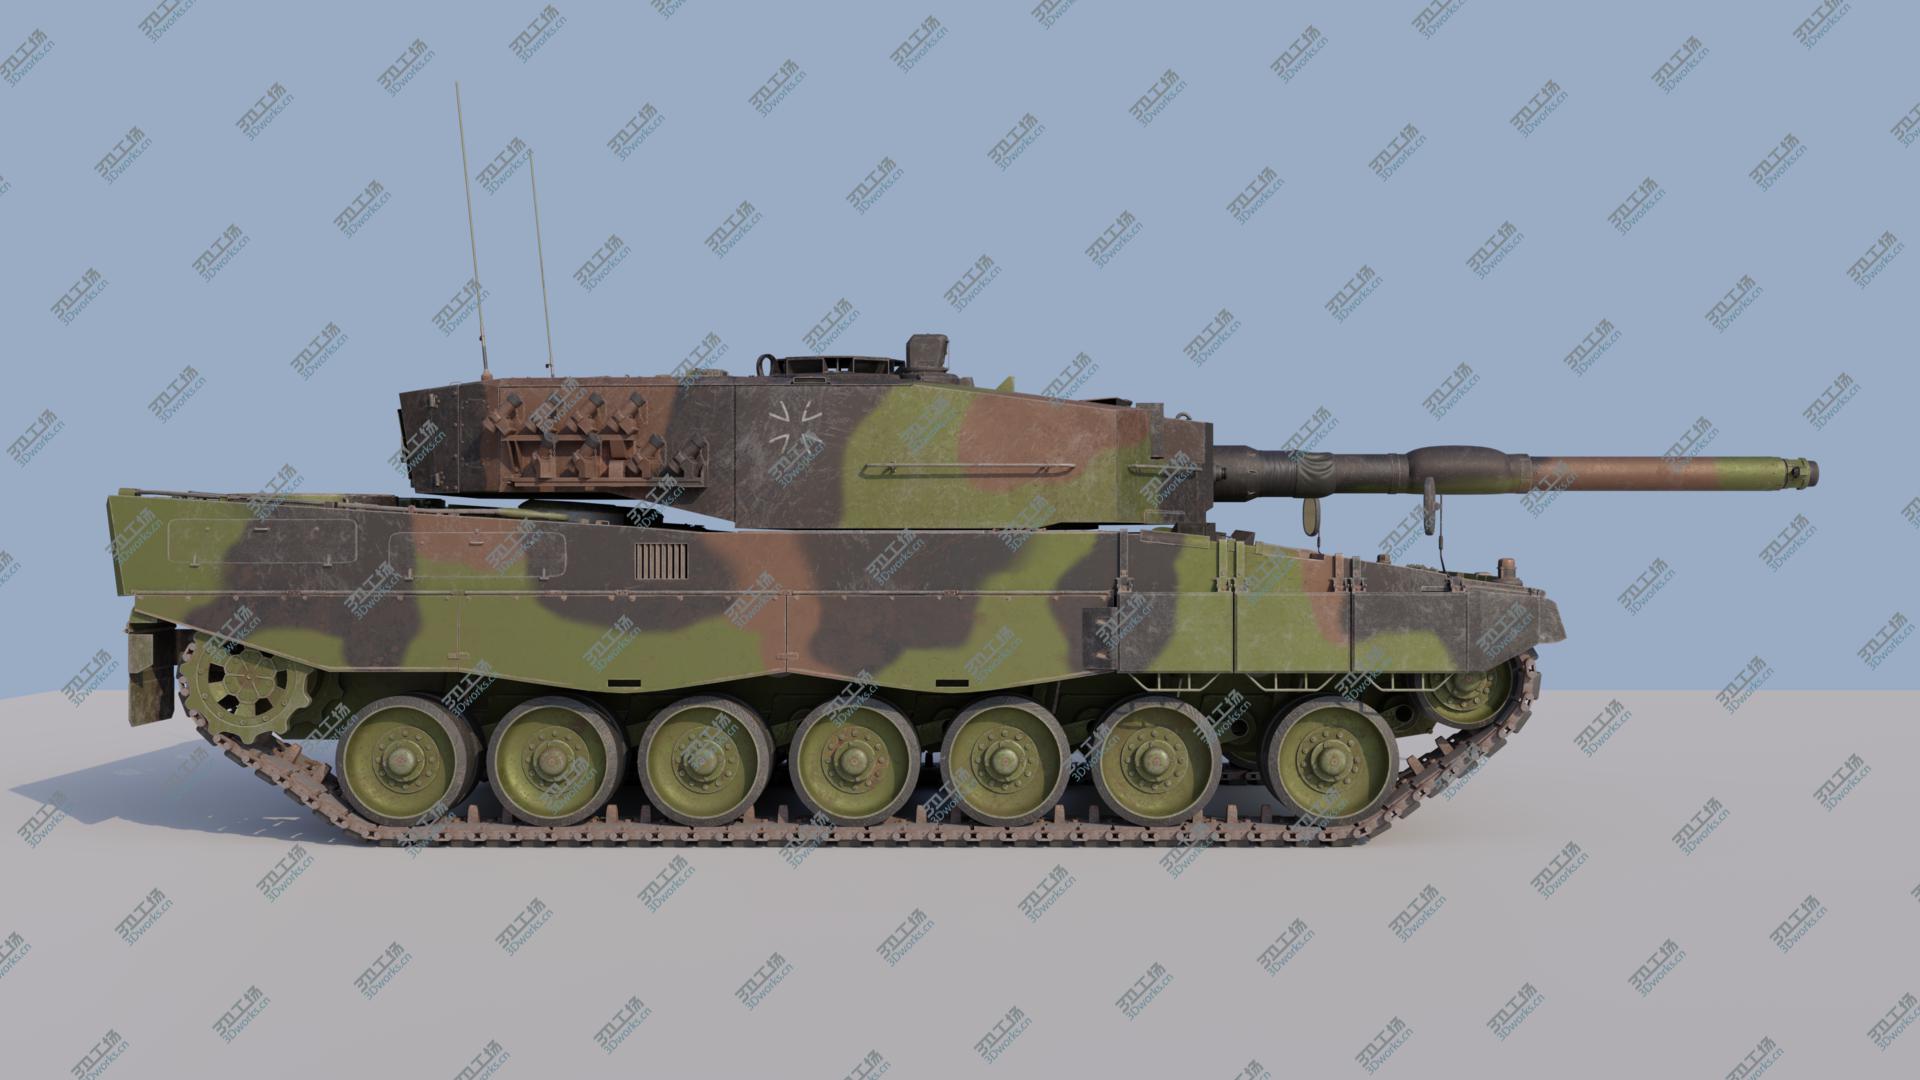 images/goods_img/202105071/3D Leopard 2 A4 Germen Battle Tank model/3.jpg